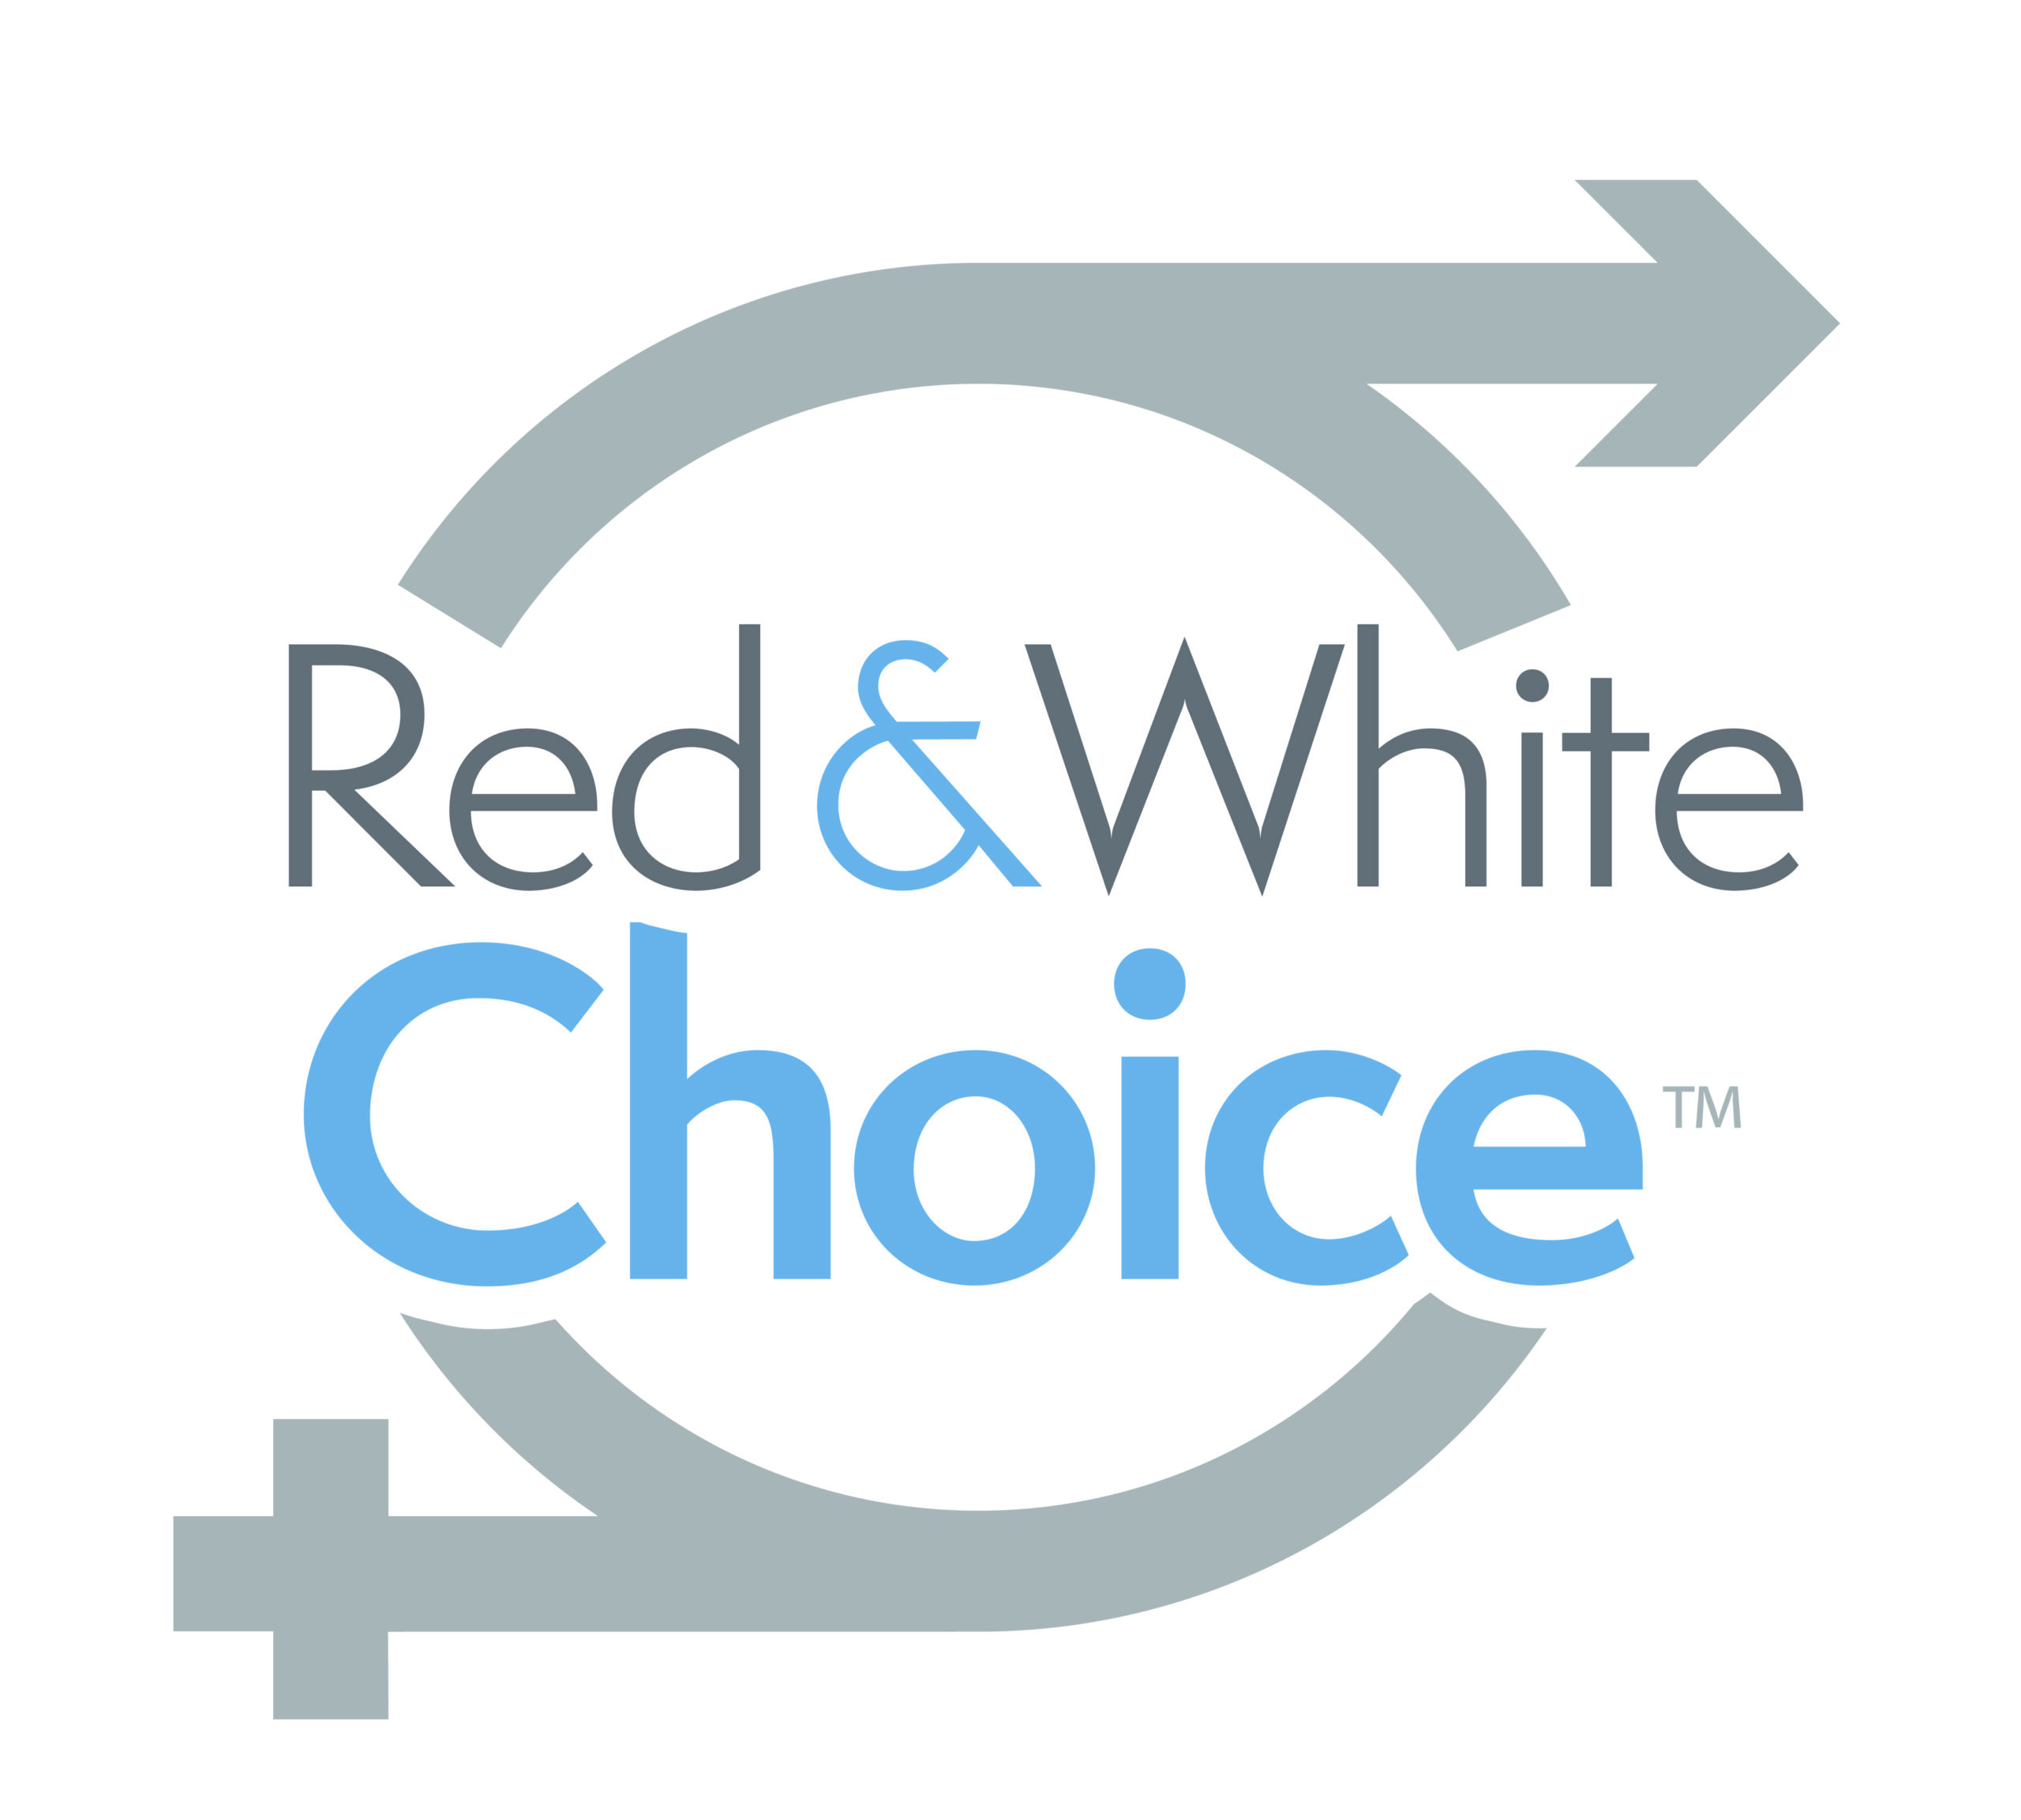 Red & White Choice